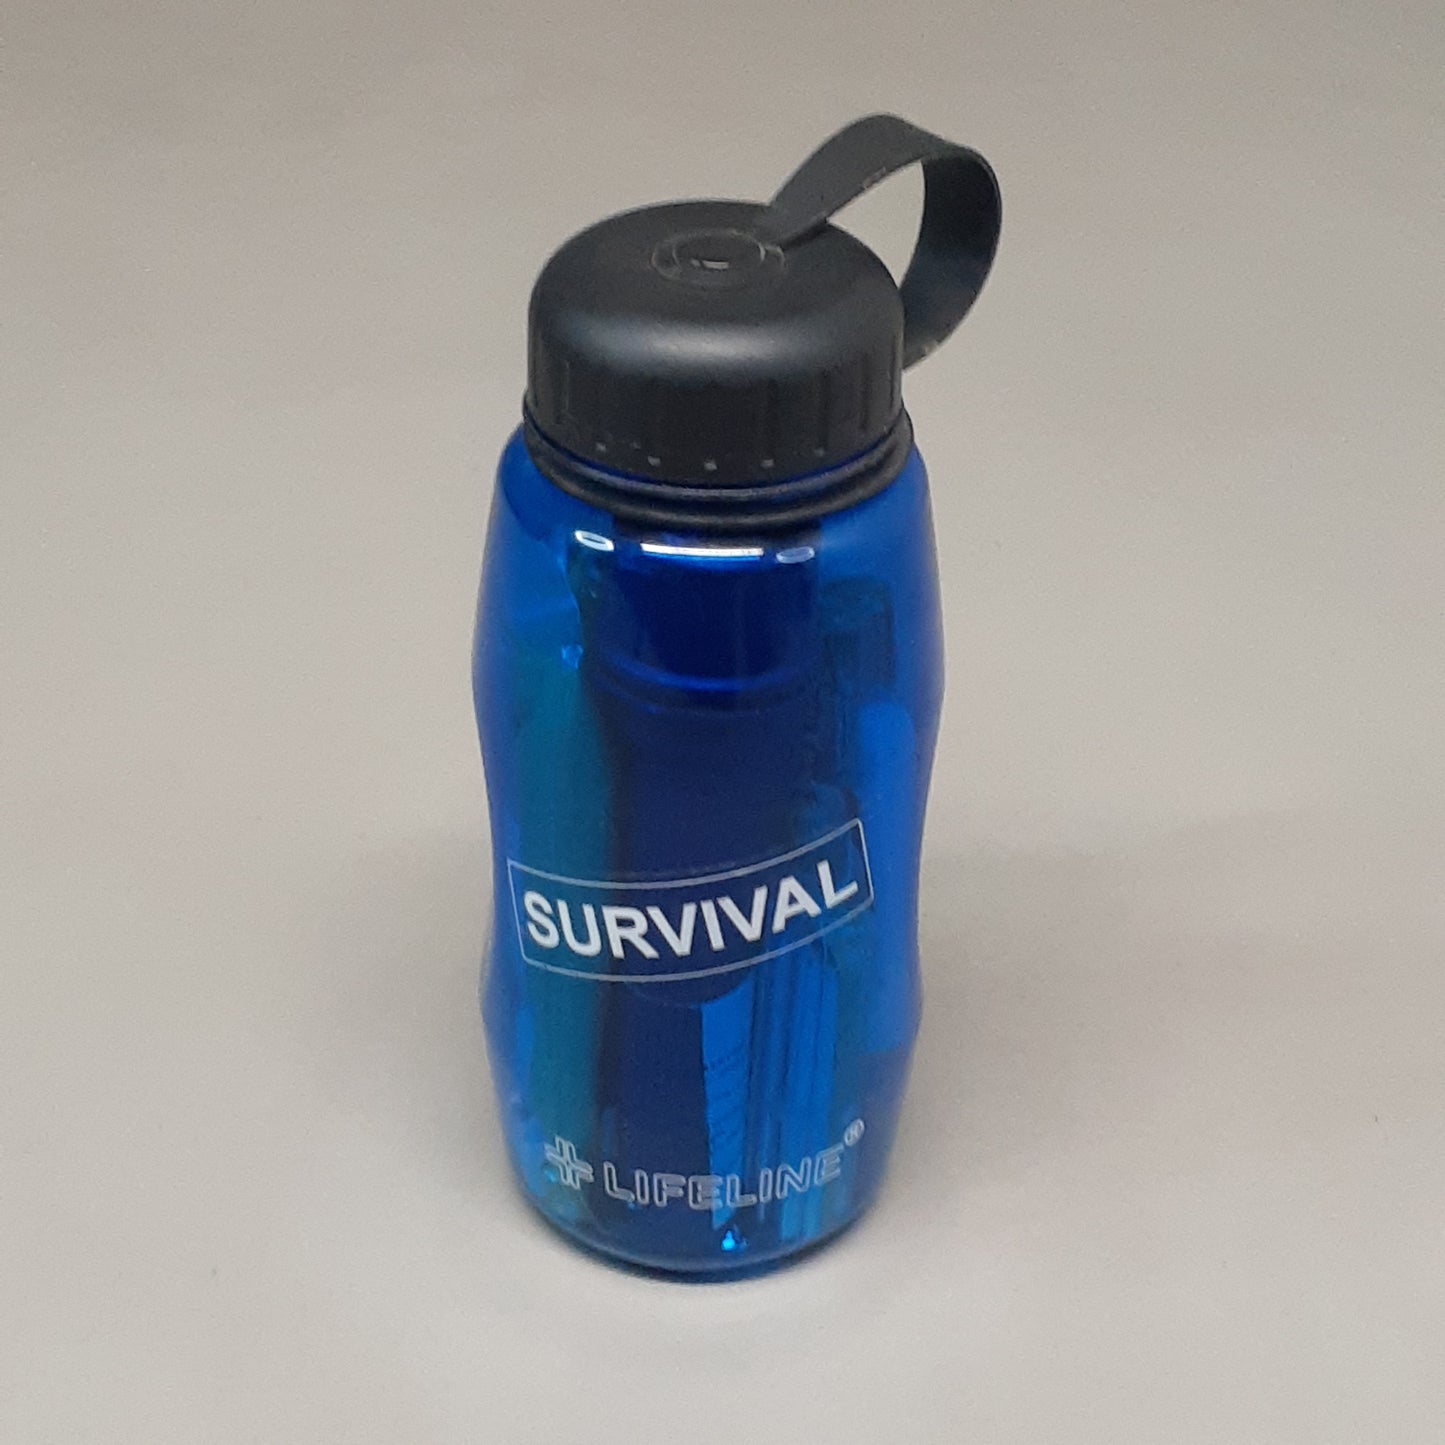 LIFELINE Survival In a Bottle Kit 8 Pieces 26oz Blue 5162375 (New Other)